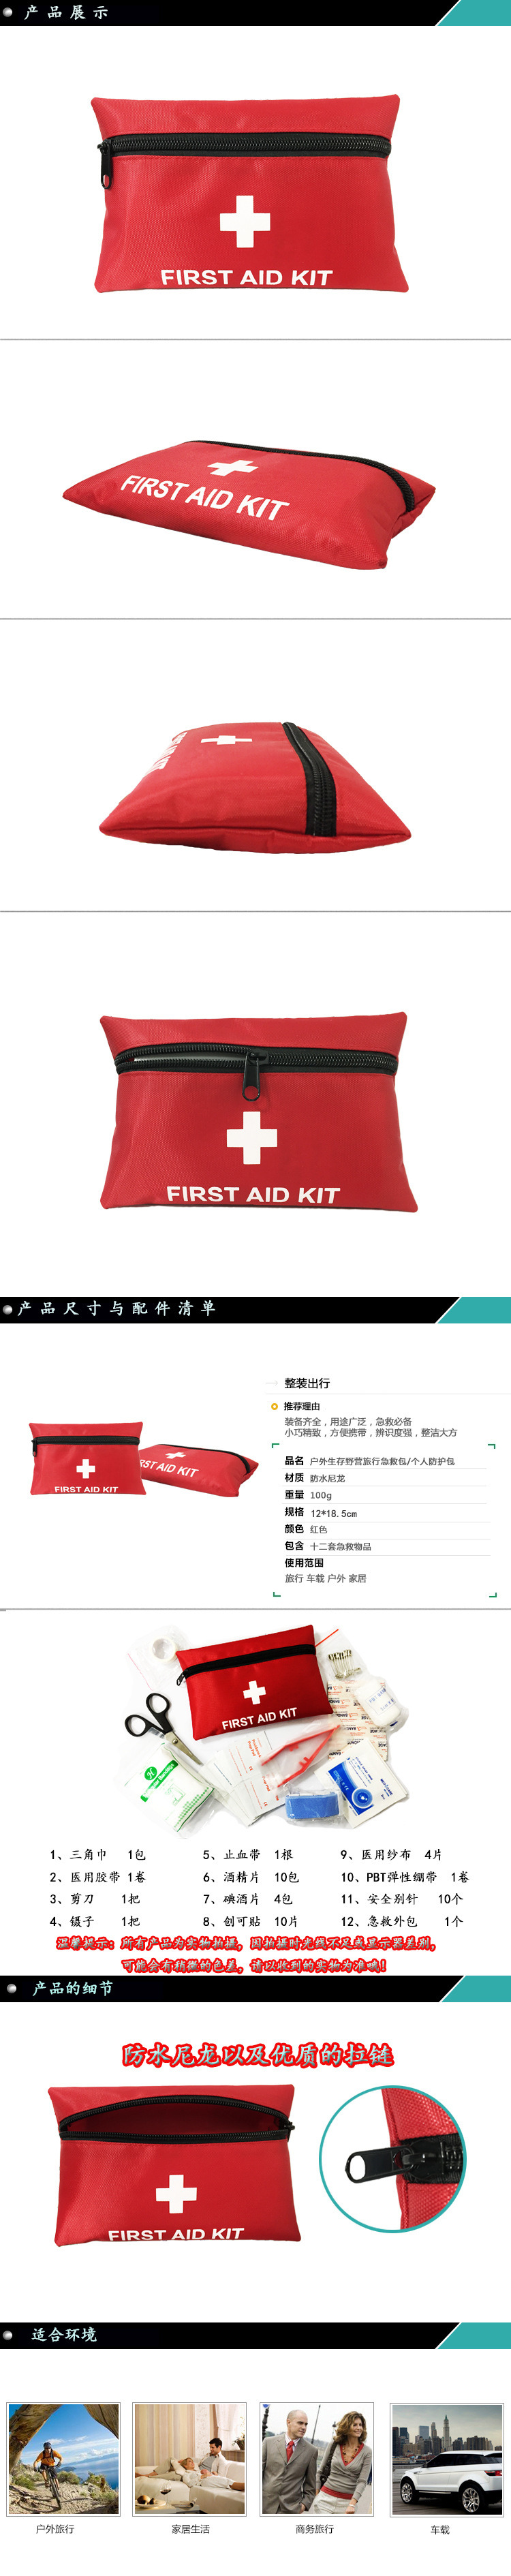 Portable Mini First Aid Kit with Hi-Q (high quality)